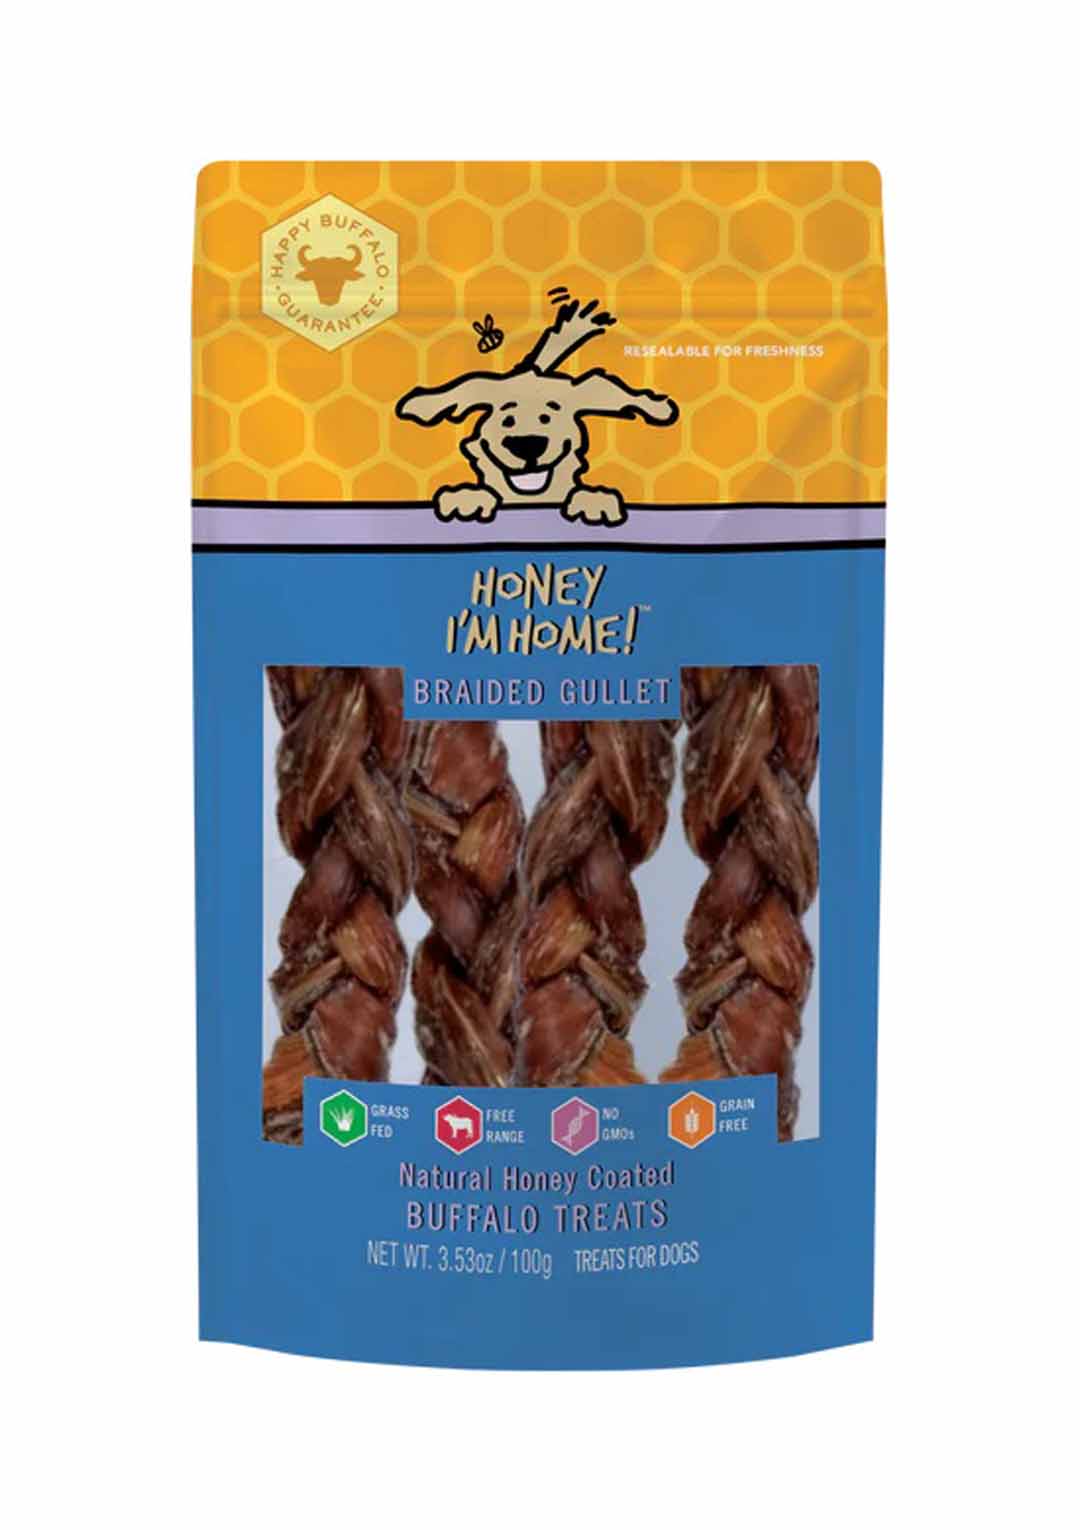 Honey IM Home Dog Natural Honey Coated Buffalo Treats Braided Gullet 3.53Oz - Pet Supplies - Honey Im home